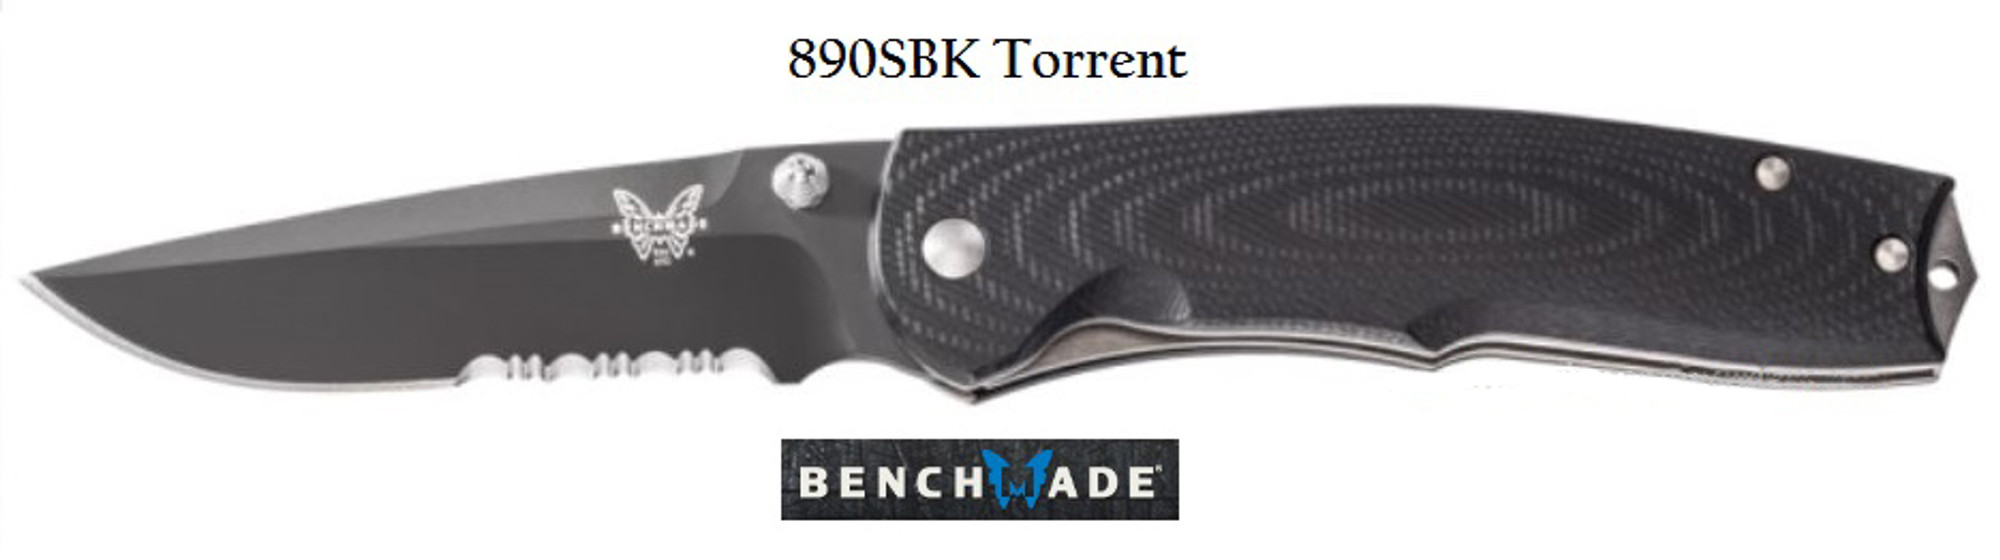 Benchmade 890SBK Torrent Black ComboEdge